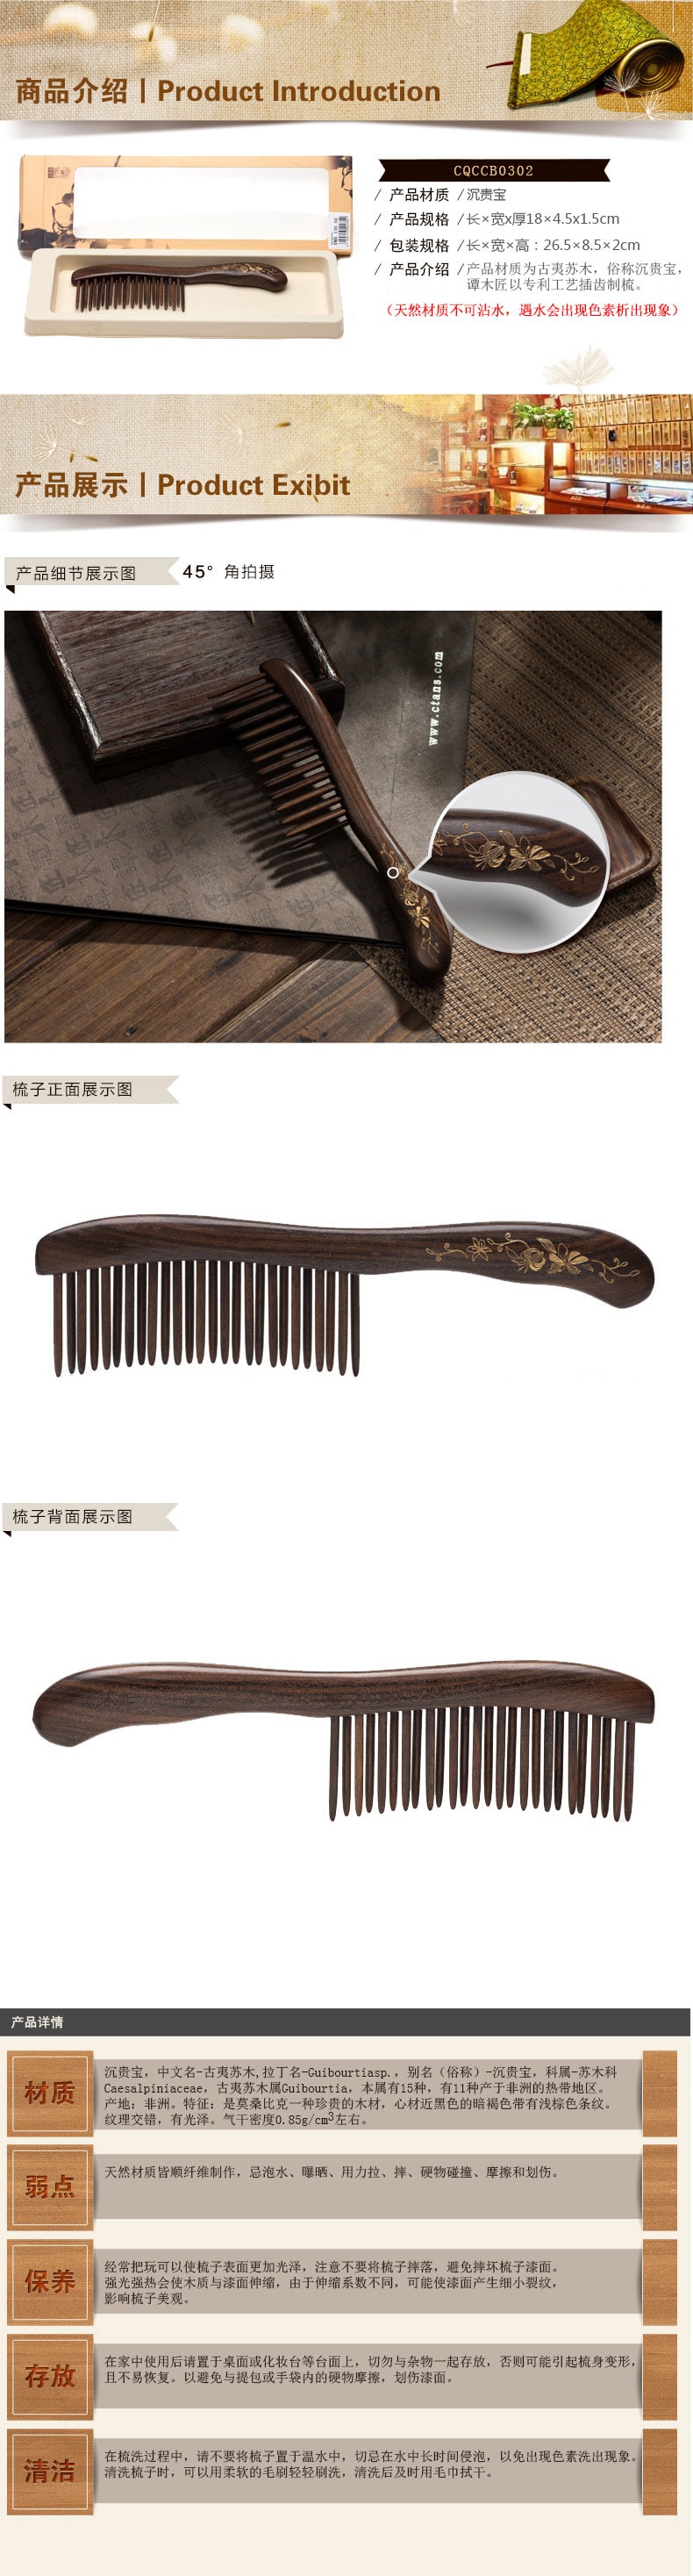 TAN MUJIANG Natural Wooden Combs Anti-static Hair Brushes Teeth-inserted Comb Care Tools